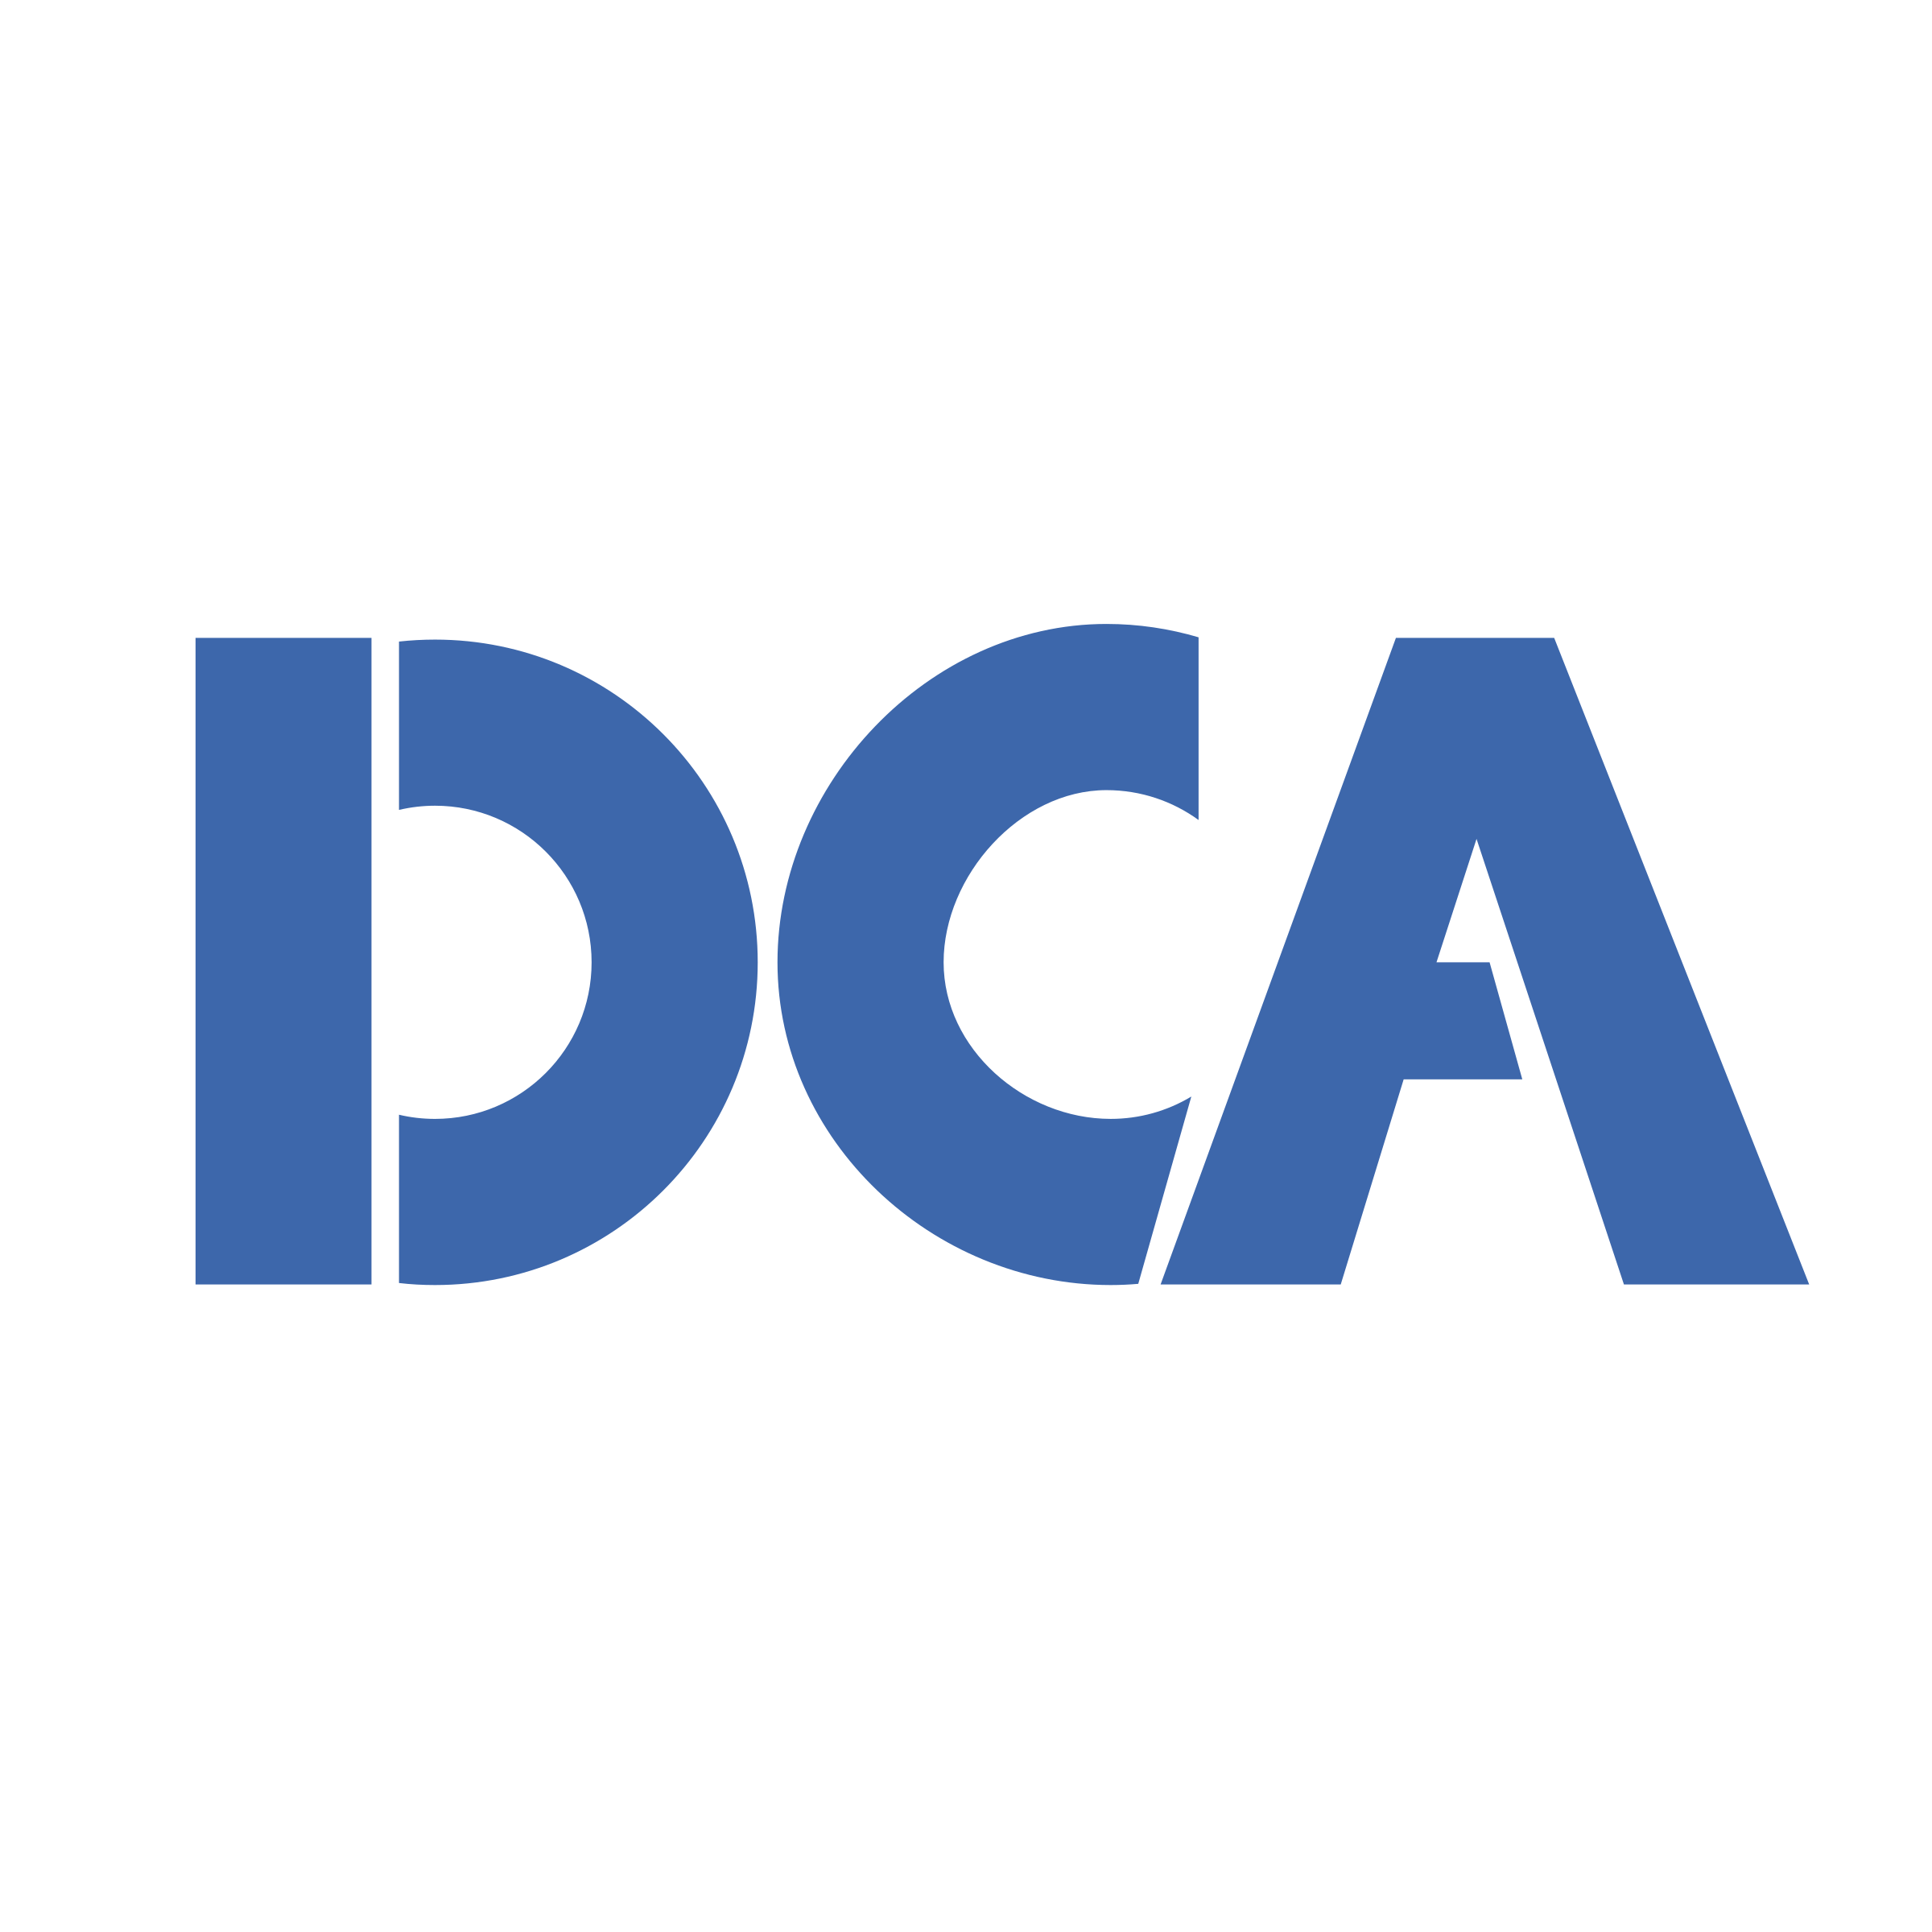 DCA Logo - DCA Logo PNG Transparent & SVG Vector - Freebie Supply